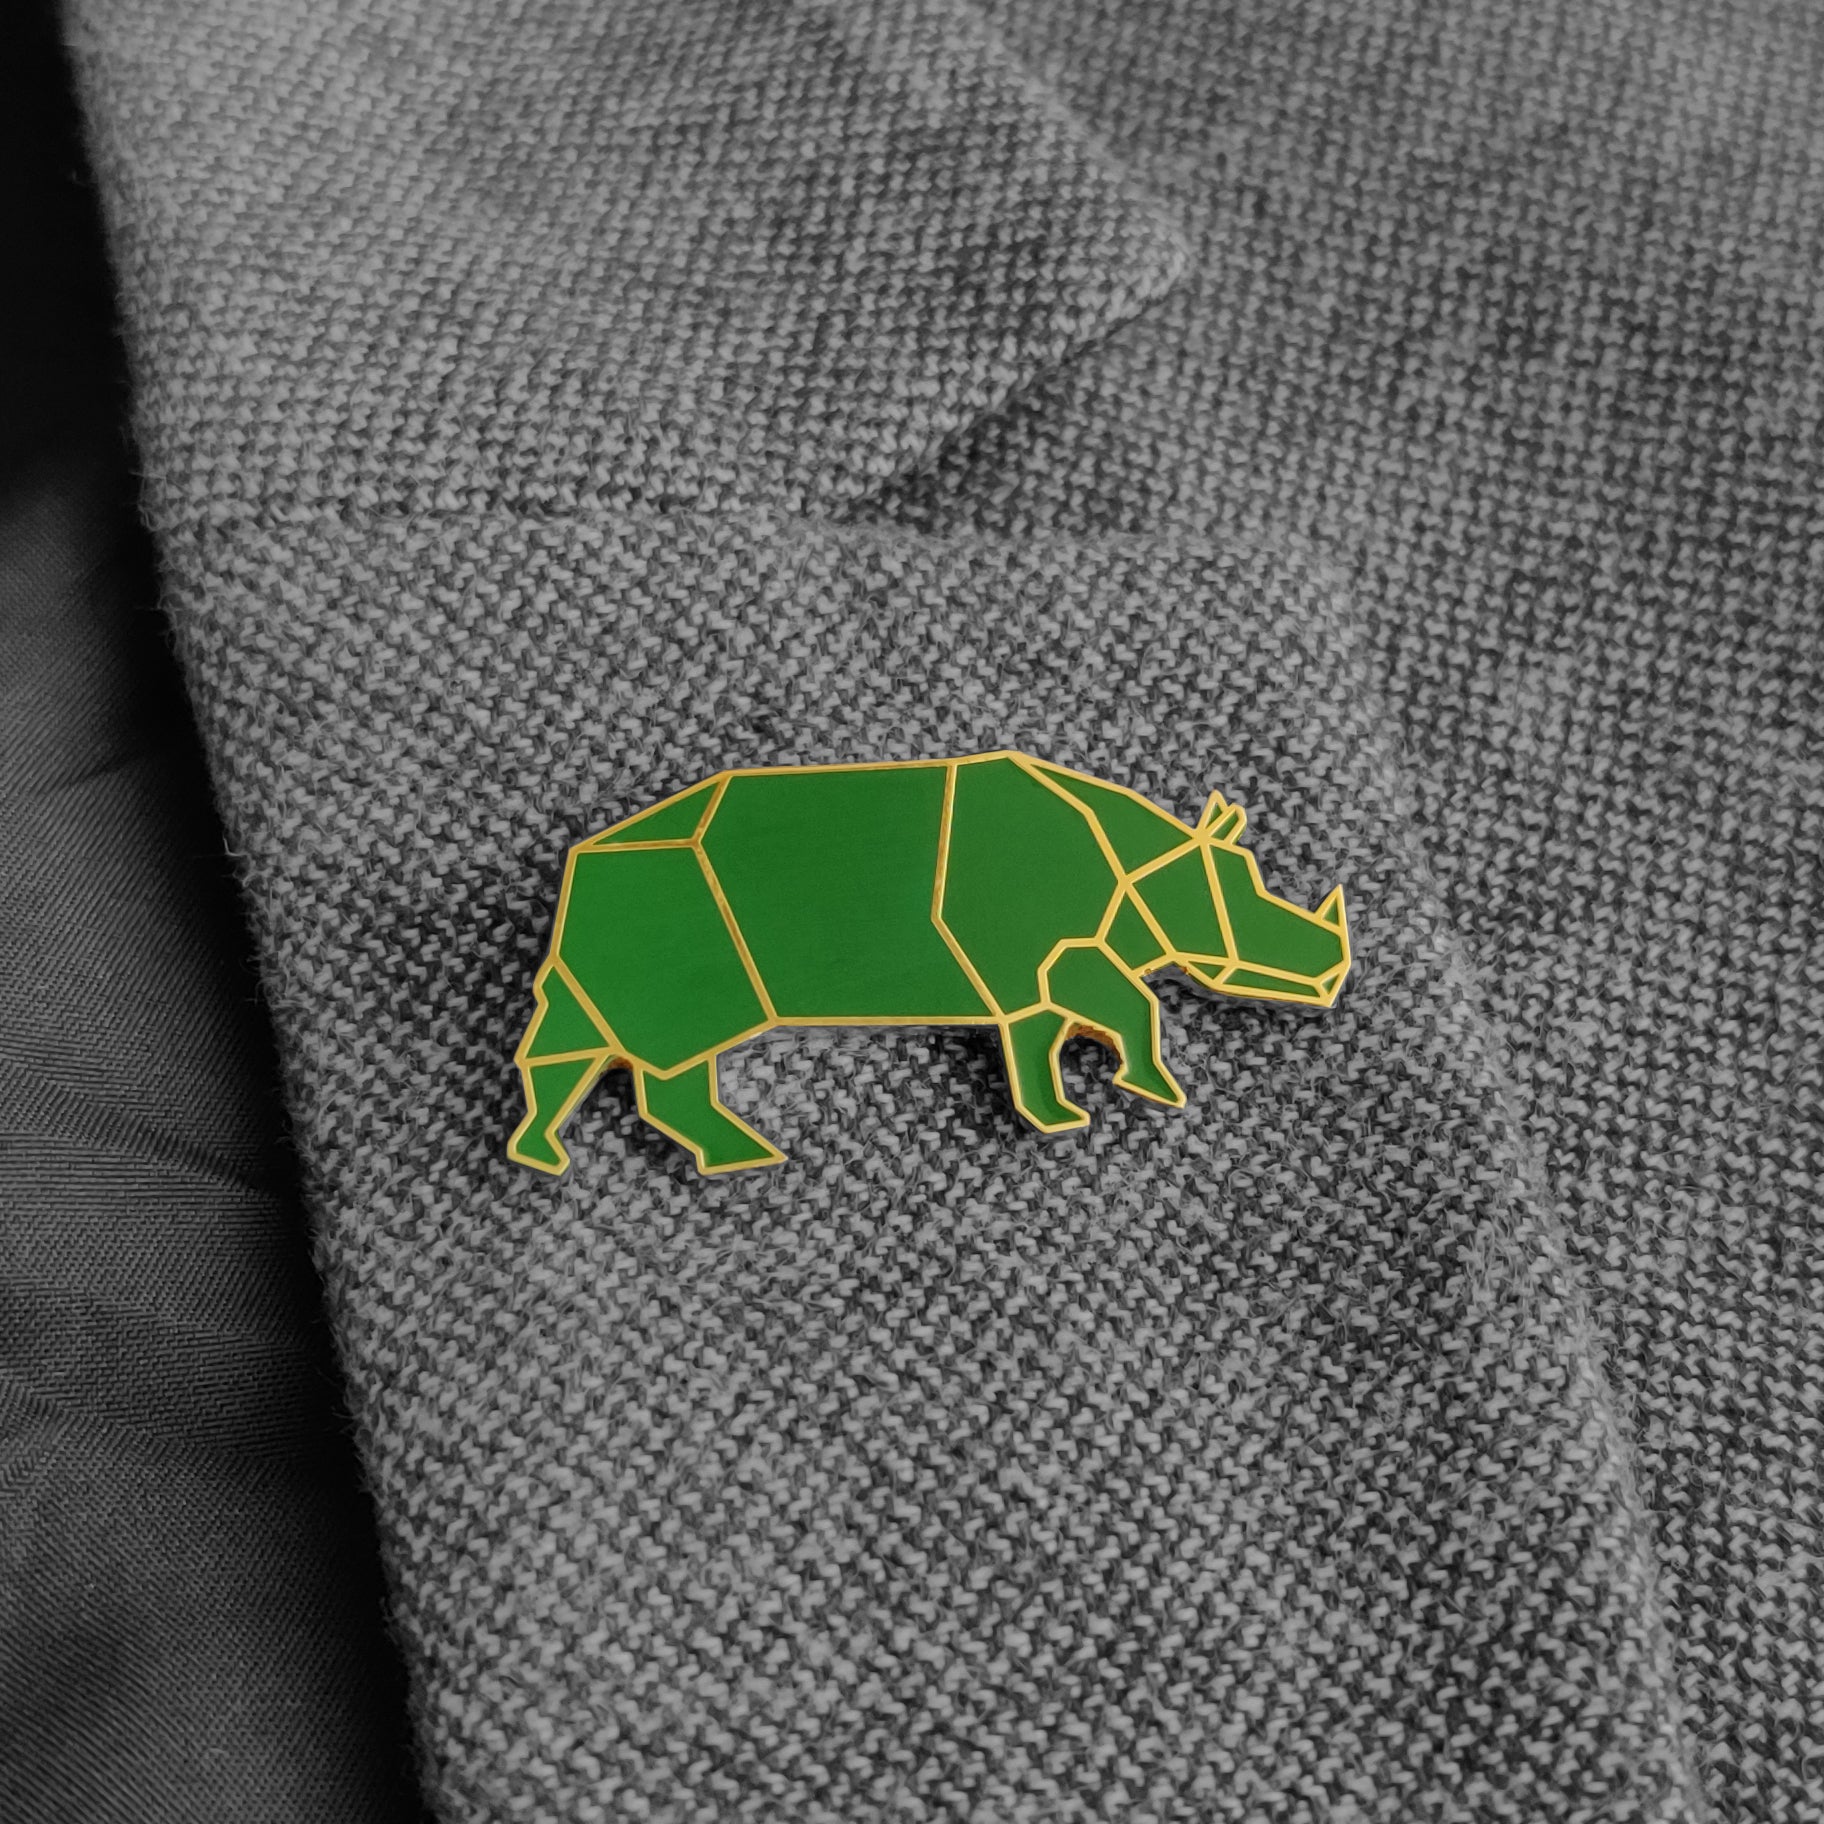 Assam Rhino Lapel Pin - Green